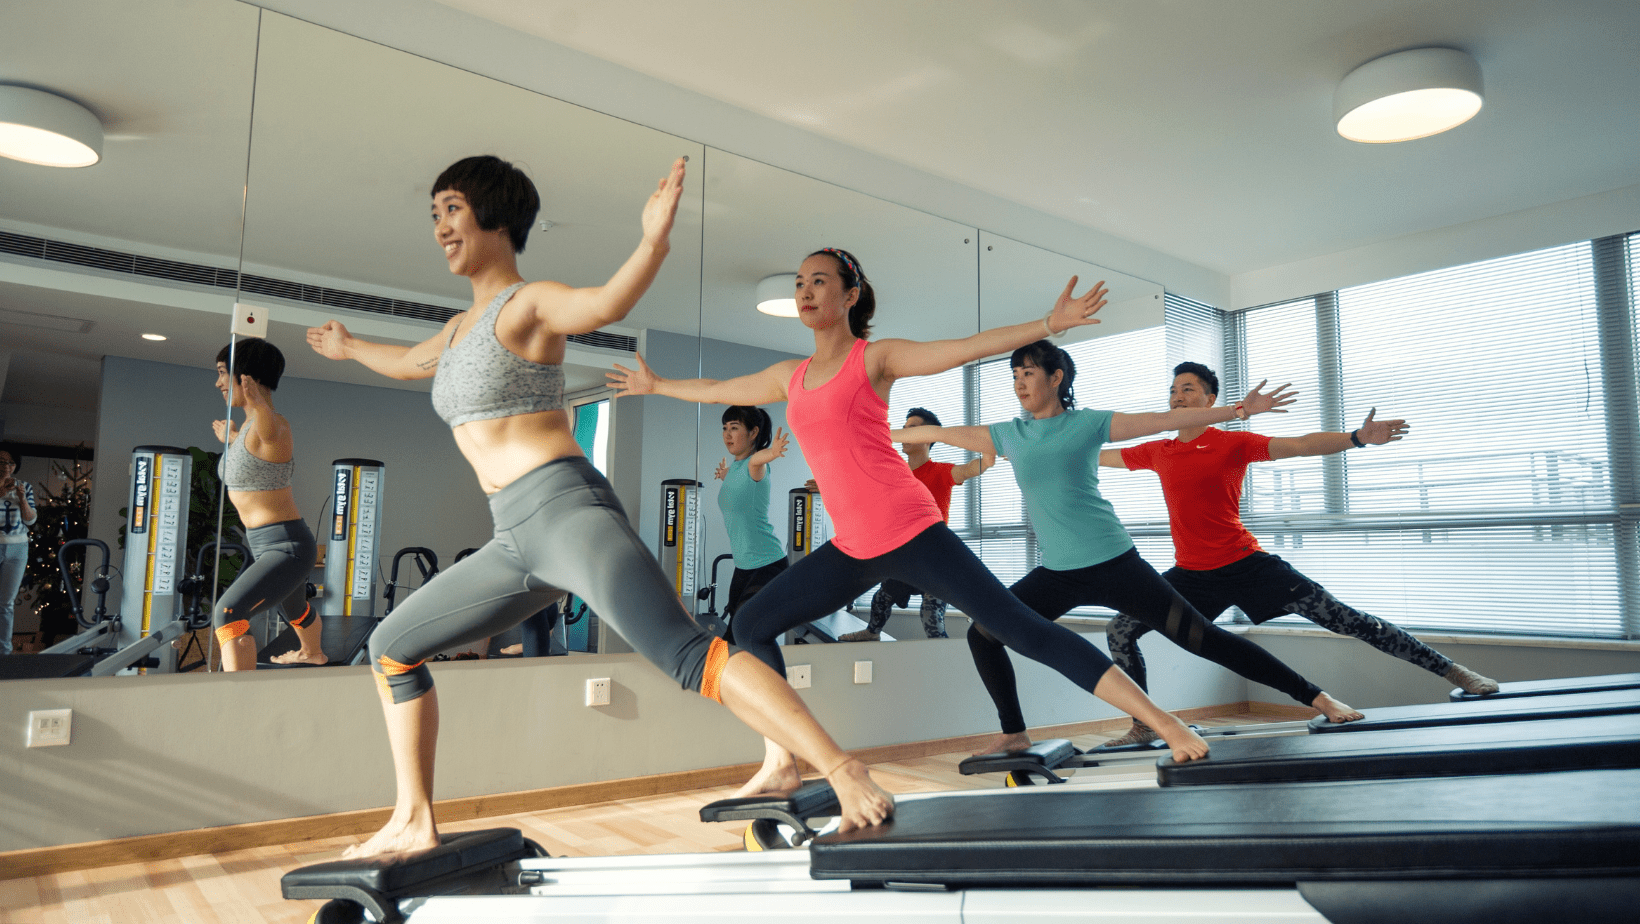 6 Health Benefits of Pilates